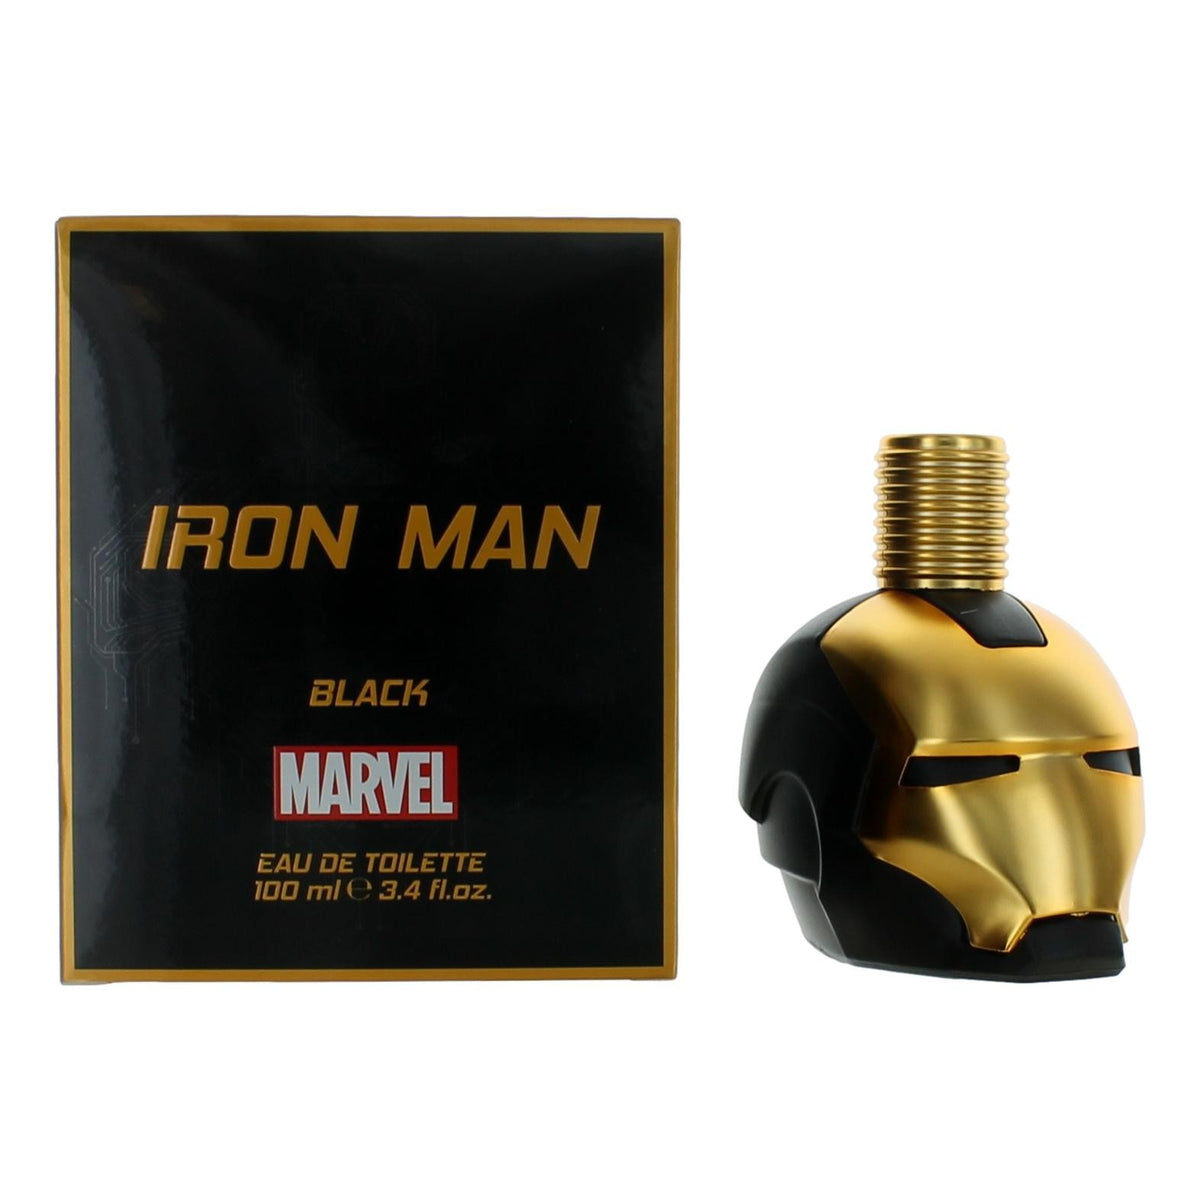 Iron Man Black by Iron Man, 3.4 oz Eau de Toilette Spray for Men